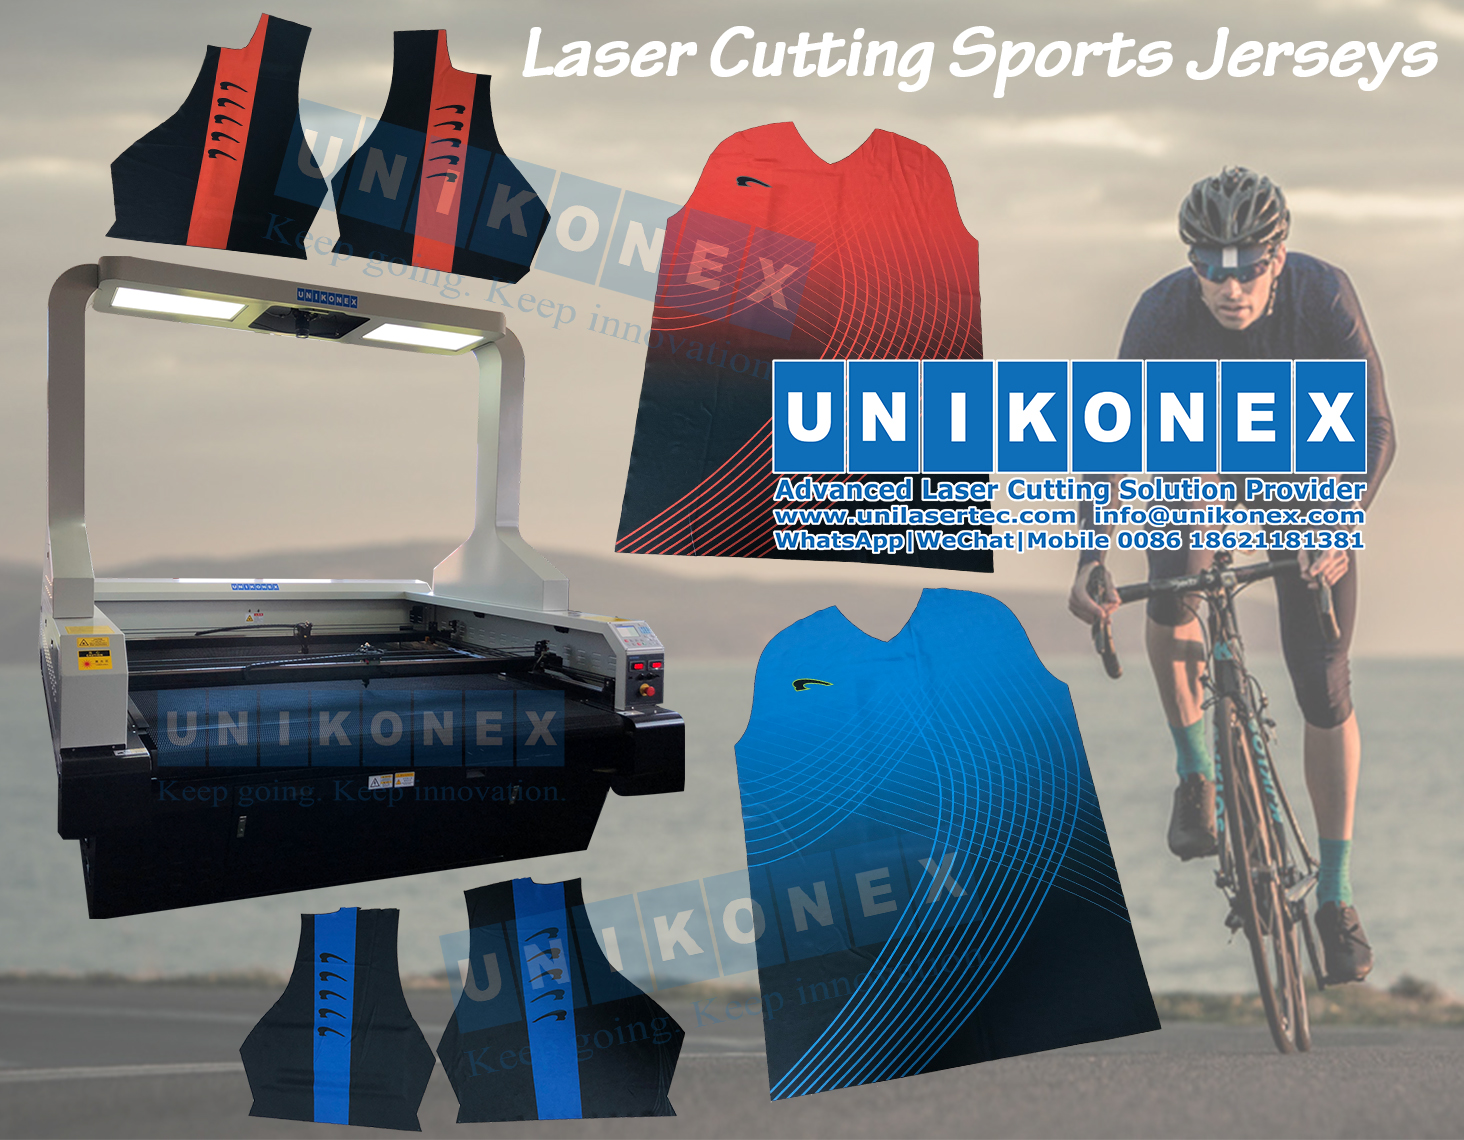 Laser cutting sublimation sports jerseys